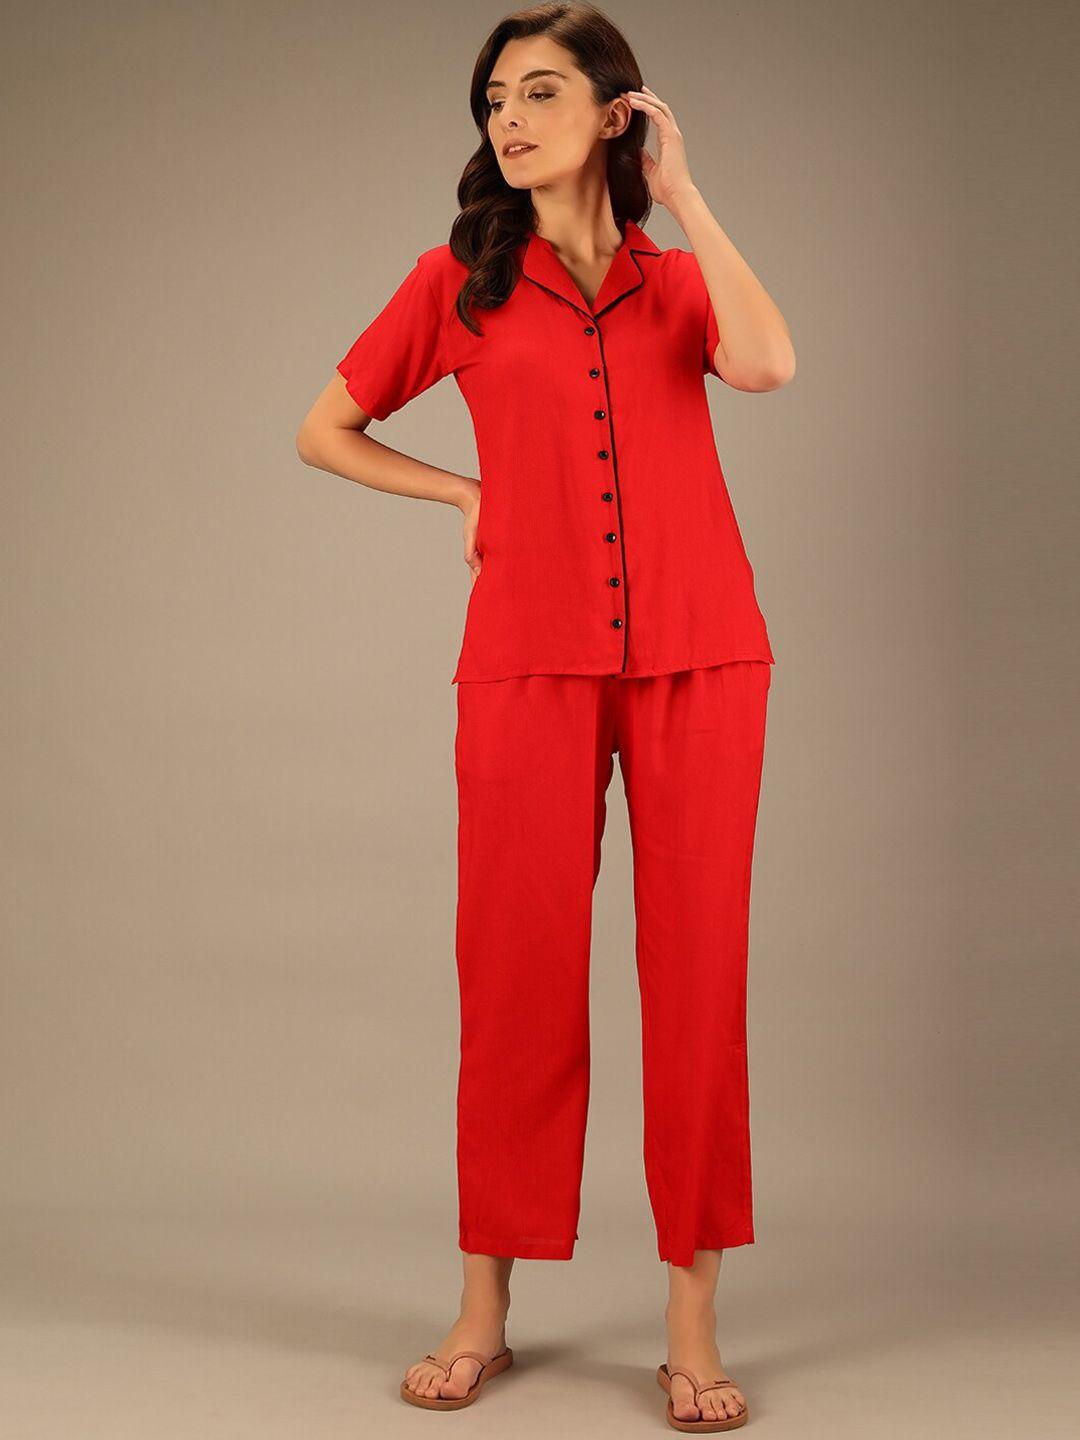 baesd women red night suit